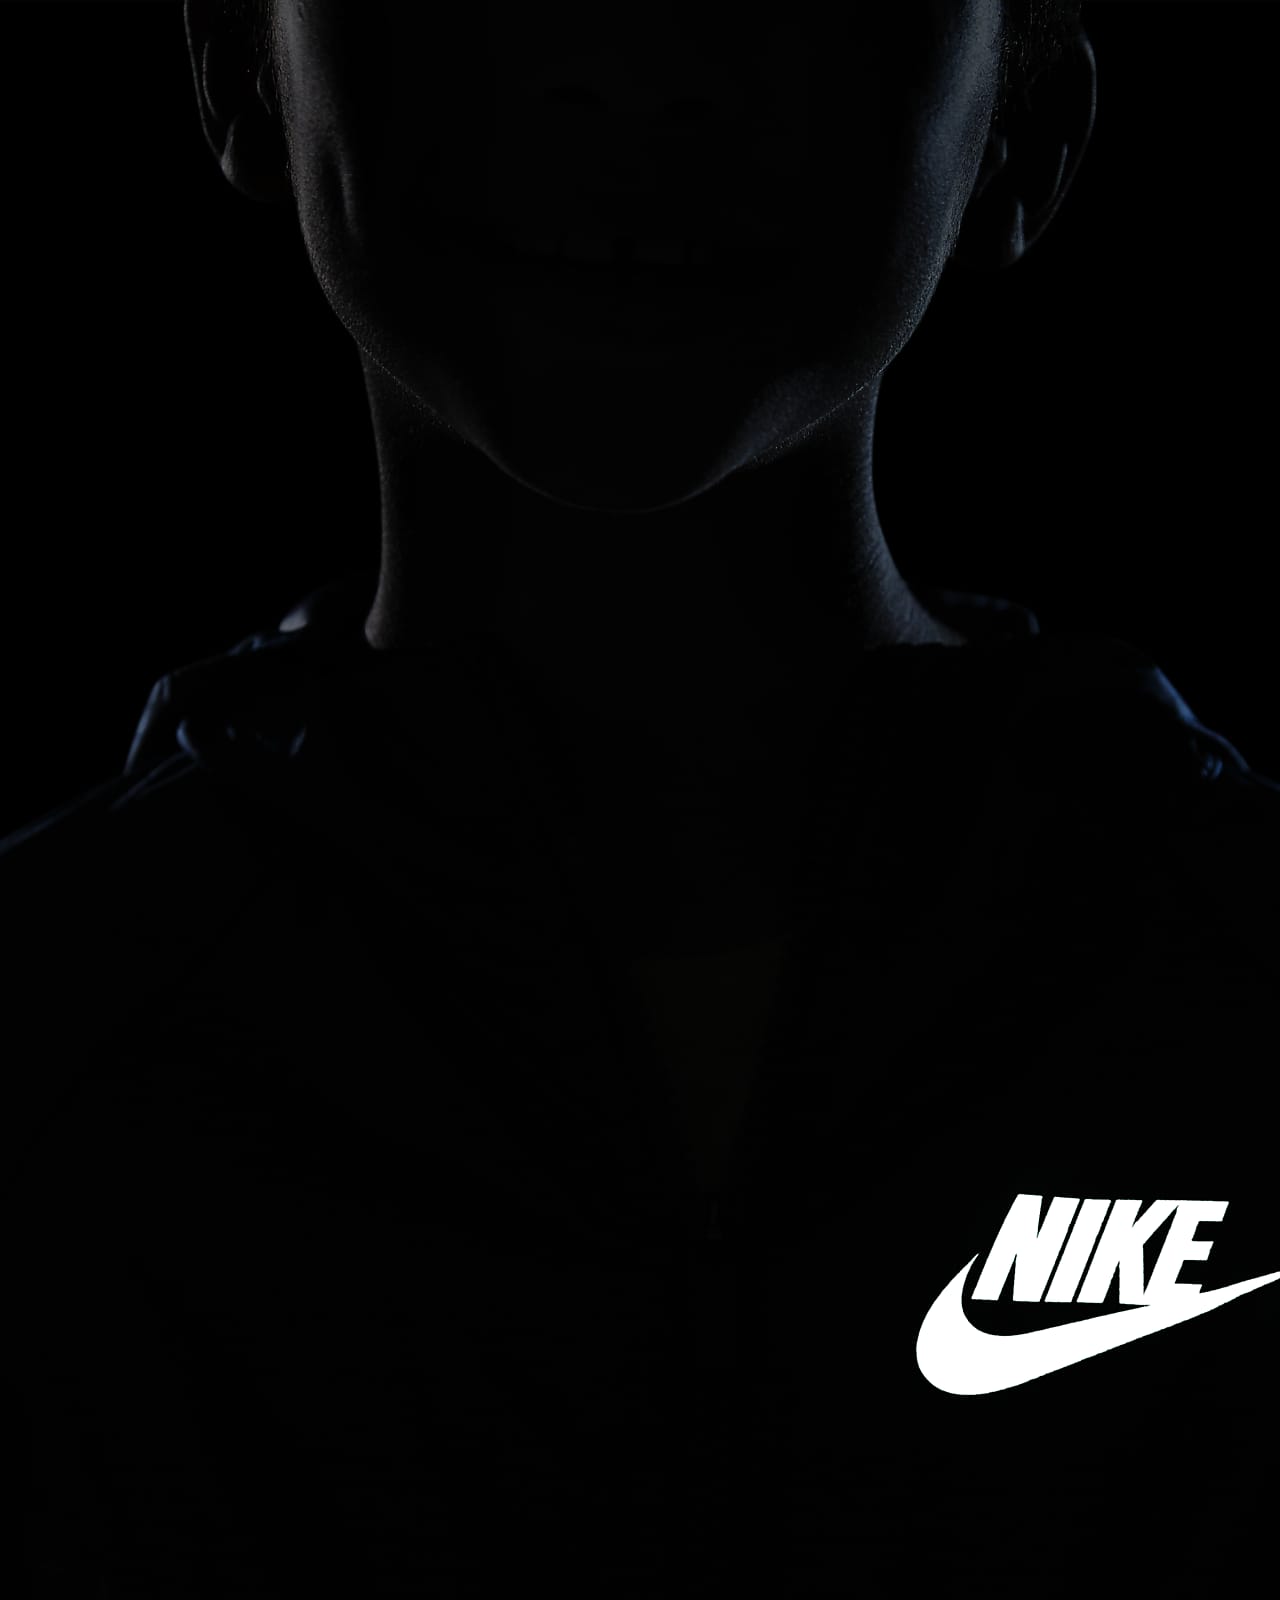 Nike Boy Wallpapers - Top Free Nike Boy Backgrounds - WallpaperAccess